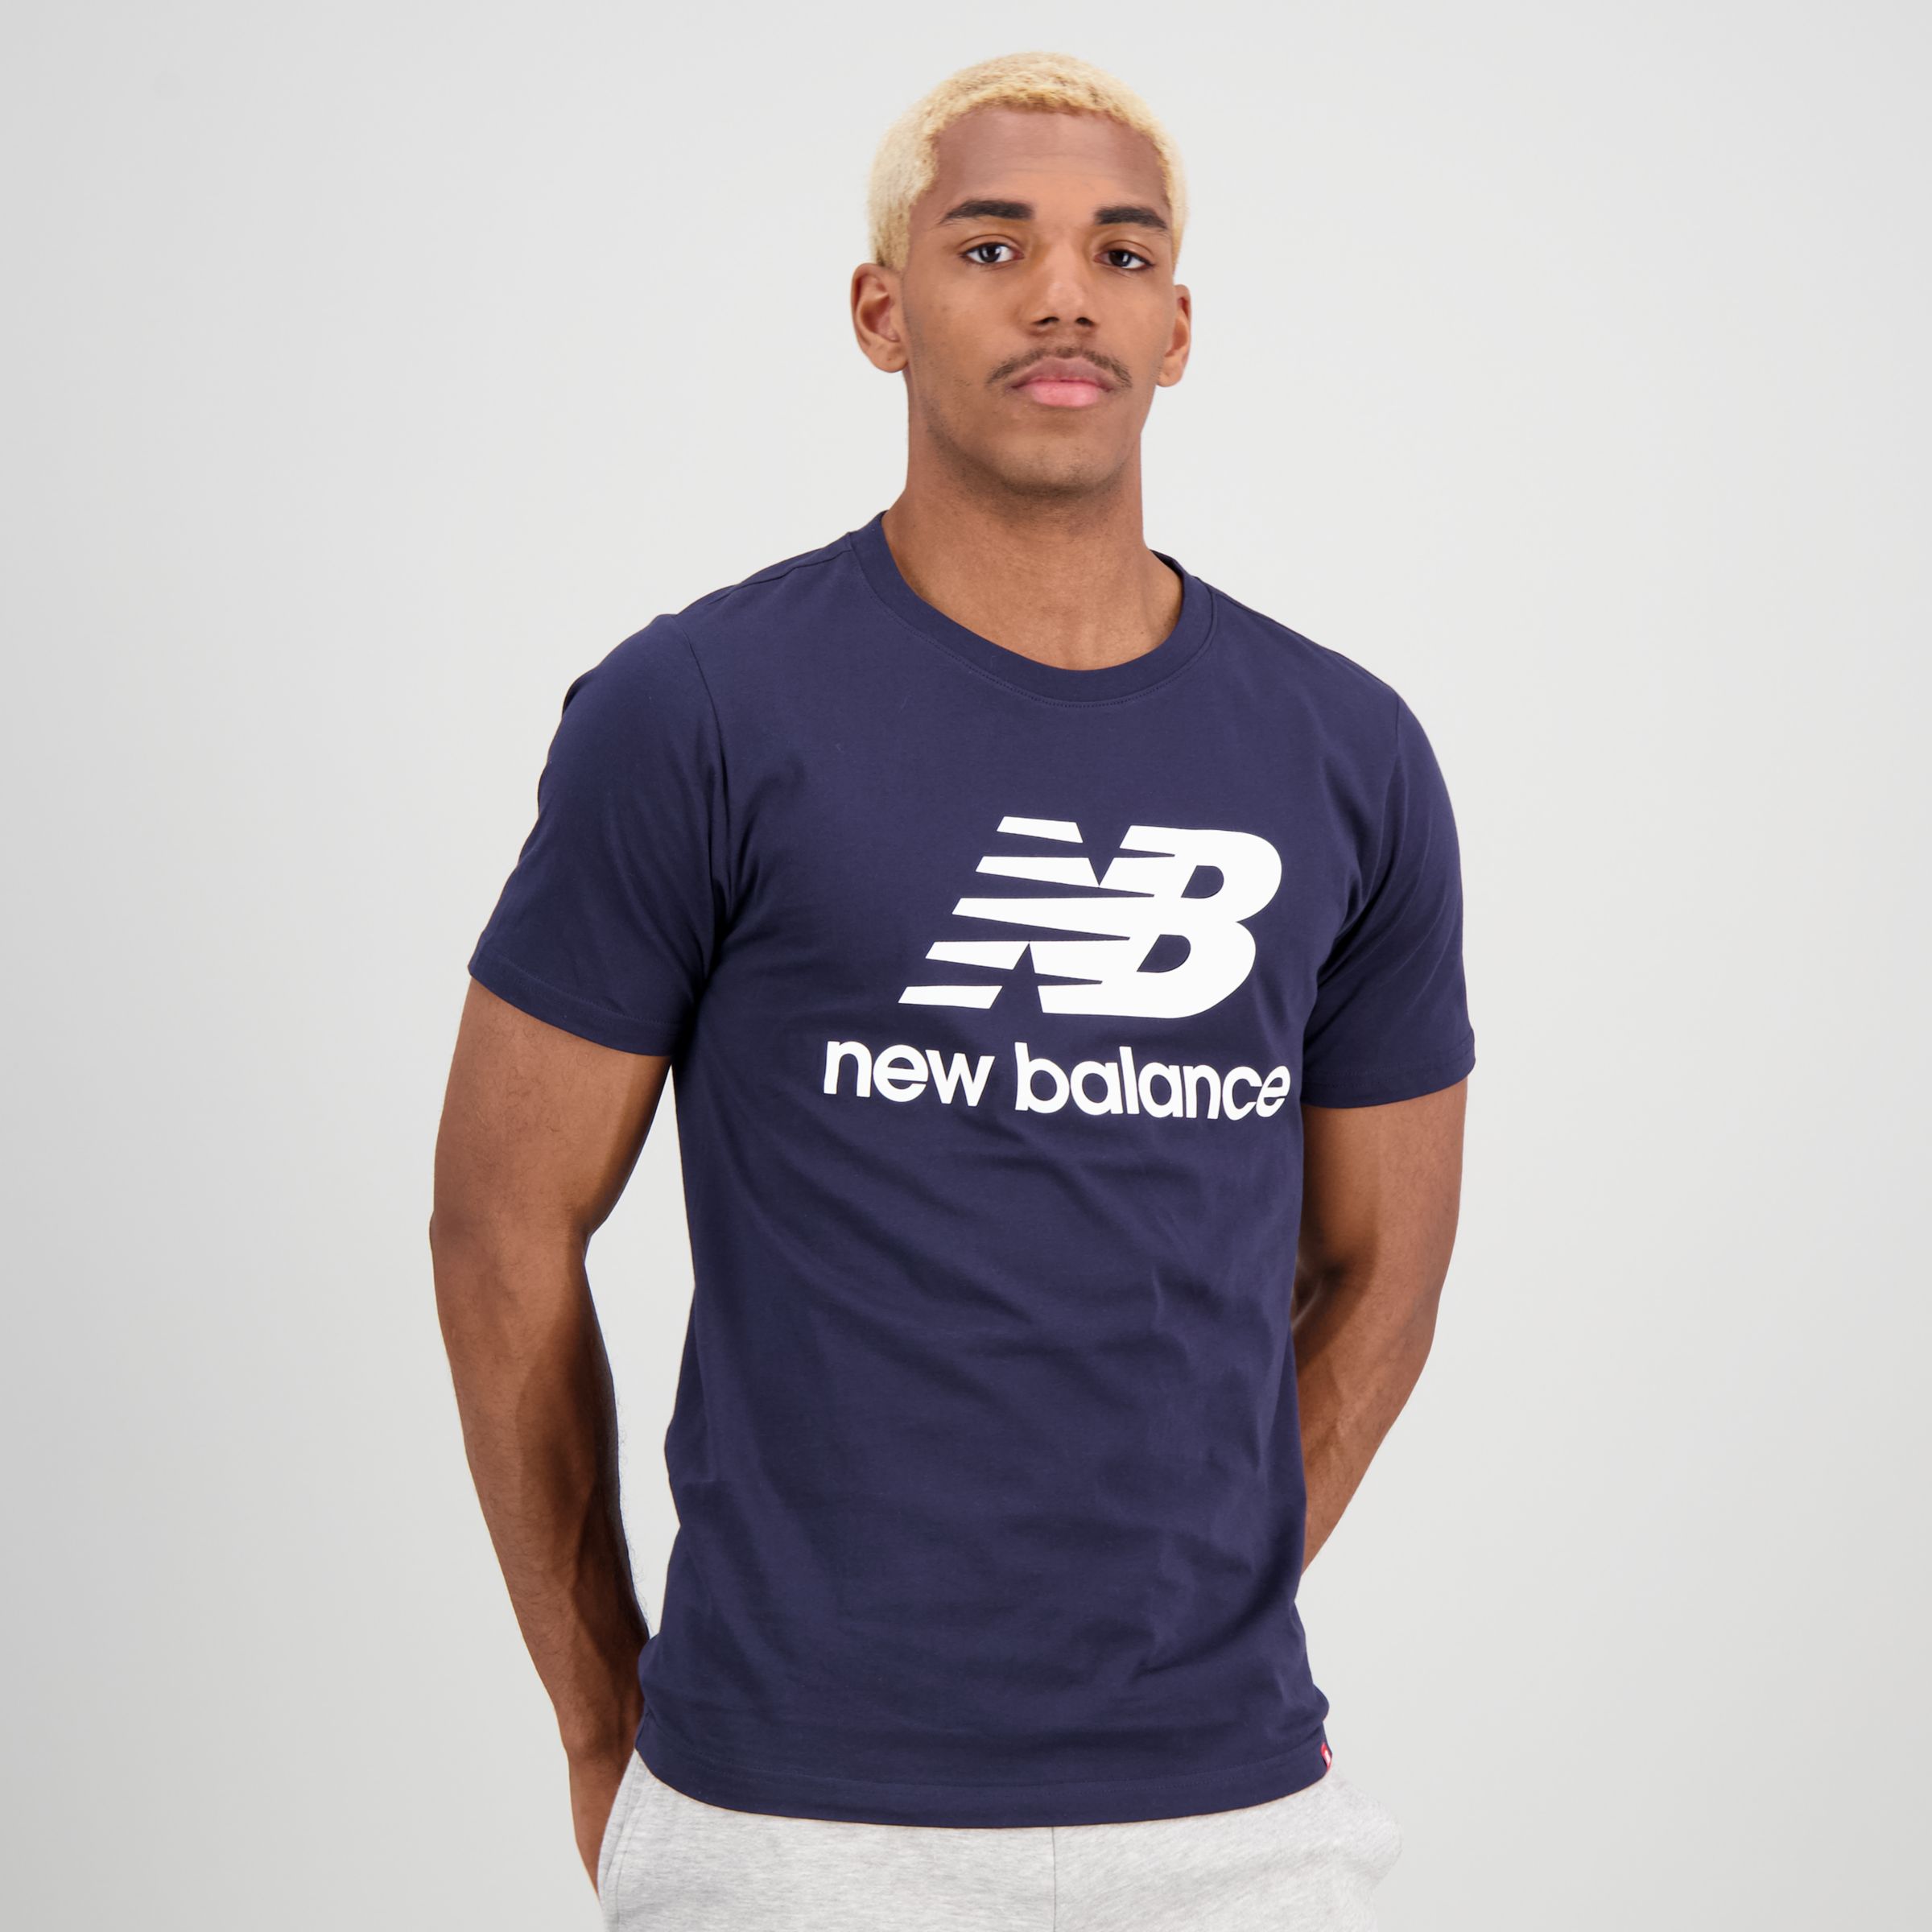 new balance t shirt sale